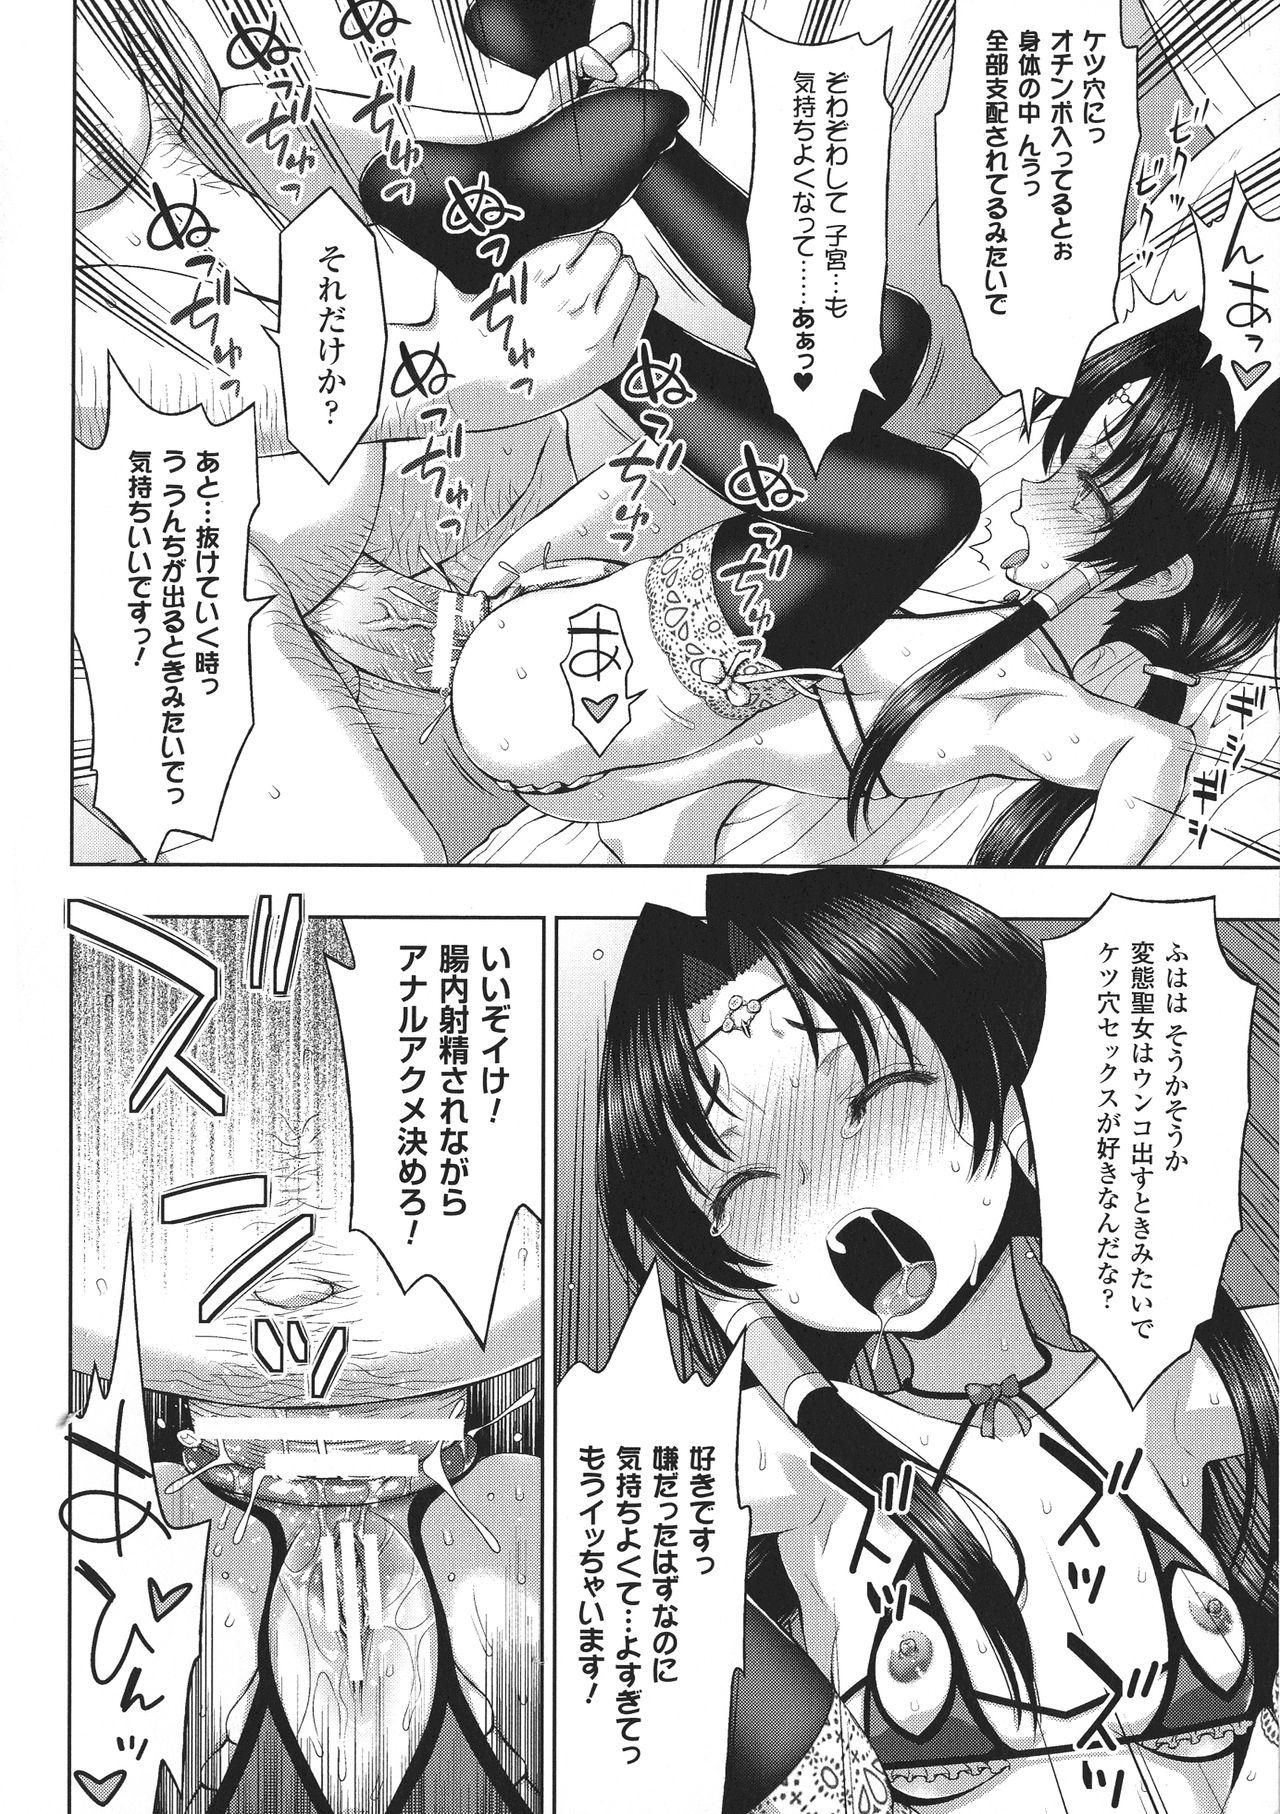 Seigi no Heroine Kangoku File DX Vol. 8 79